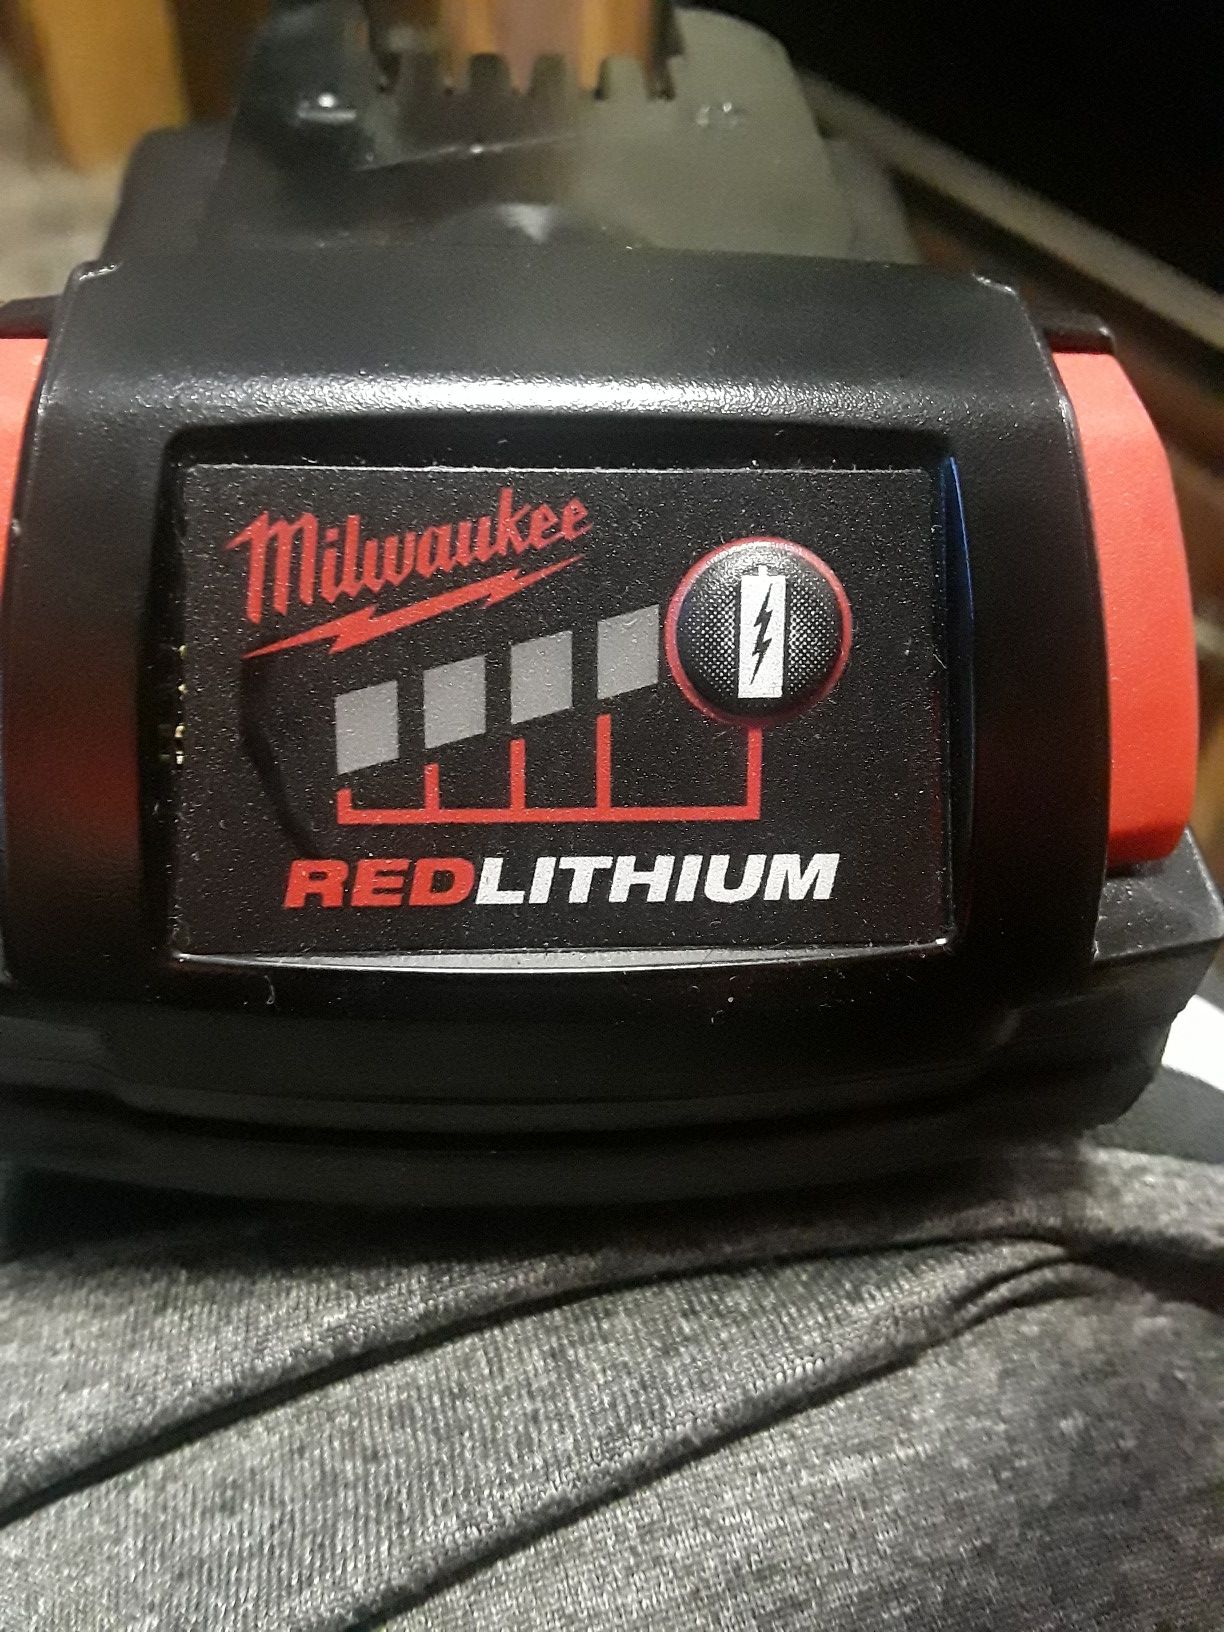 Milwaukee 18 volt RED LITHIUM battery